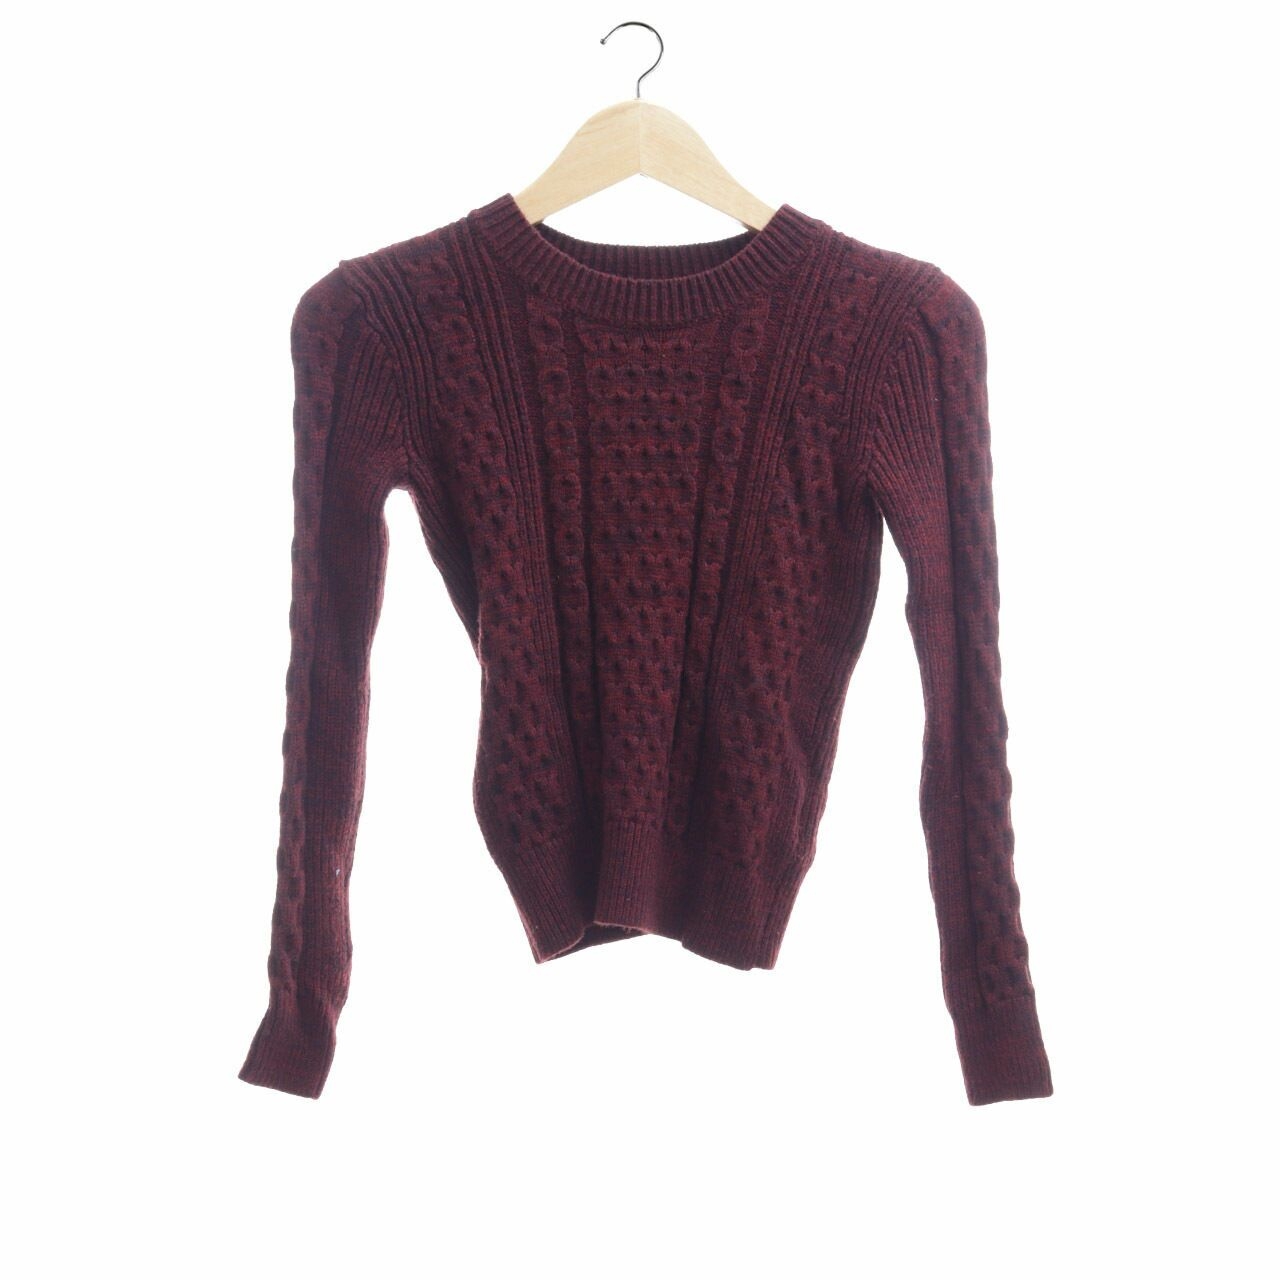 American Apparel Maroon Knit Sweater